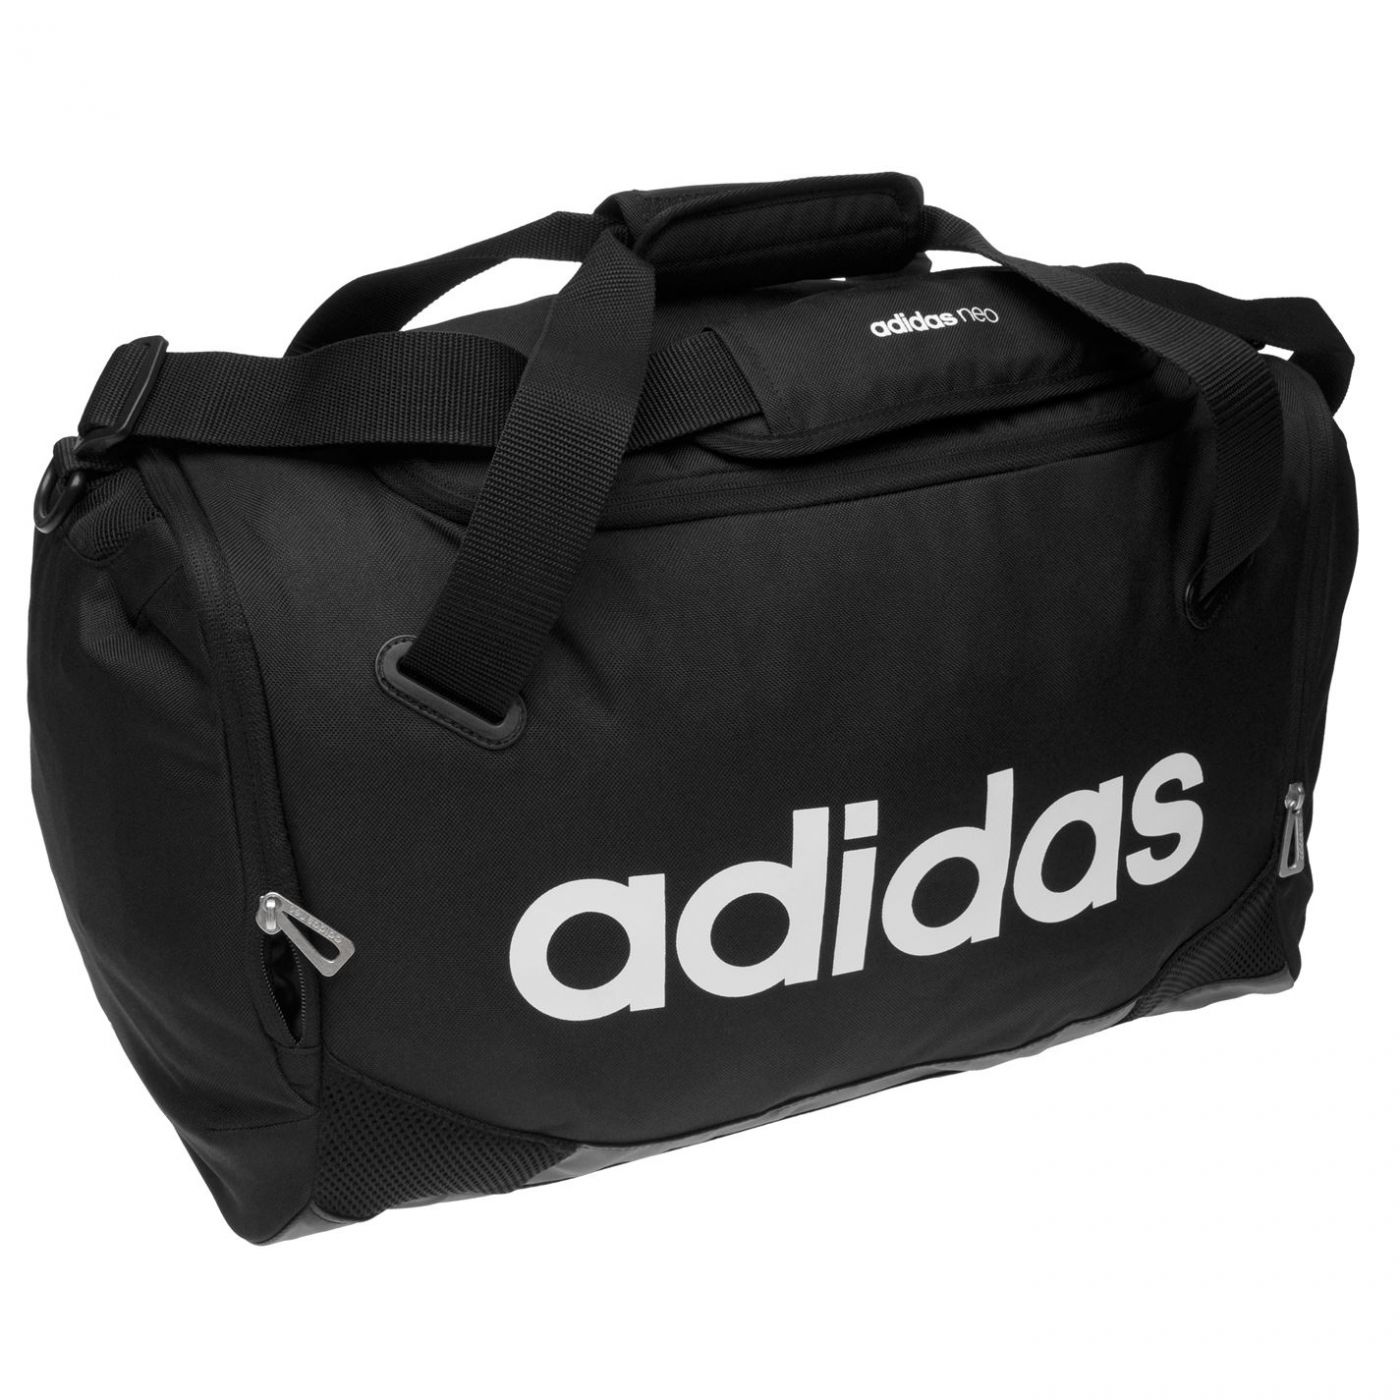 adidas linear team bag extra small